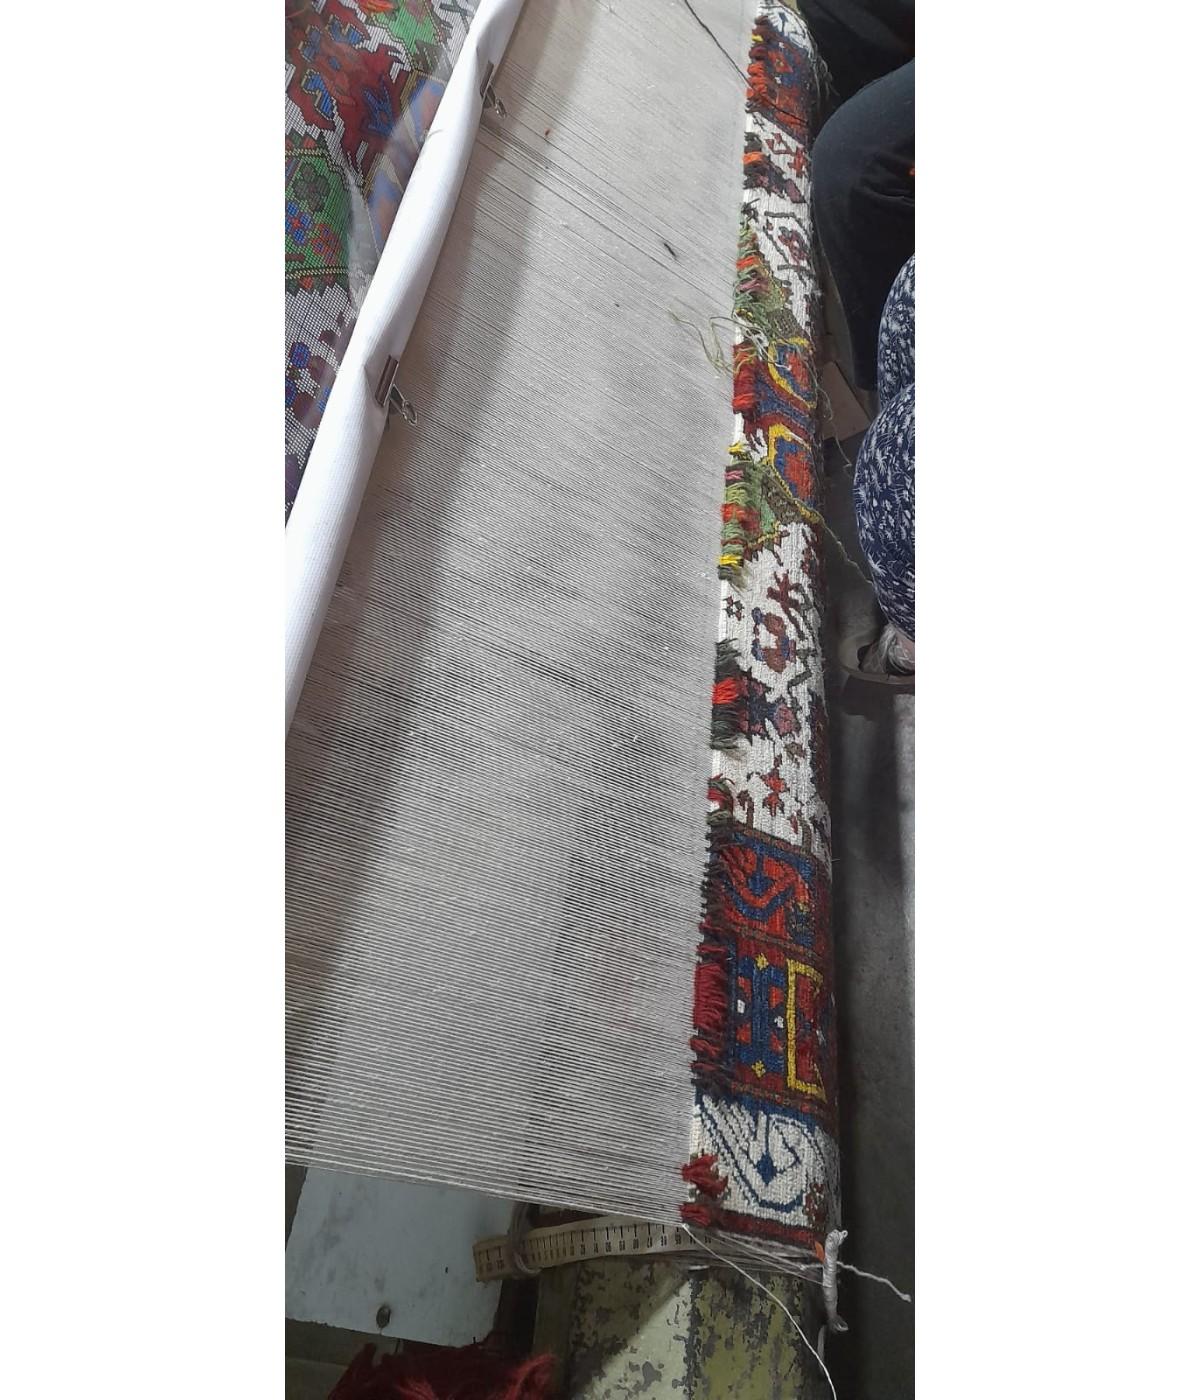 Hand-Knotted Ararat Rugs Seichur Kuba Rug Caucasian Antique Kazak Revival Carpet Natural Dyed For Sale